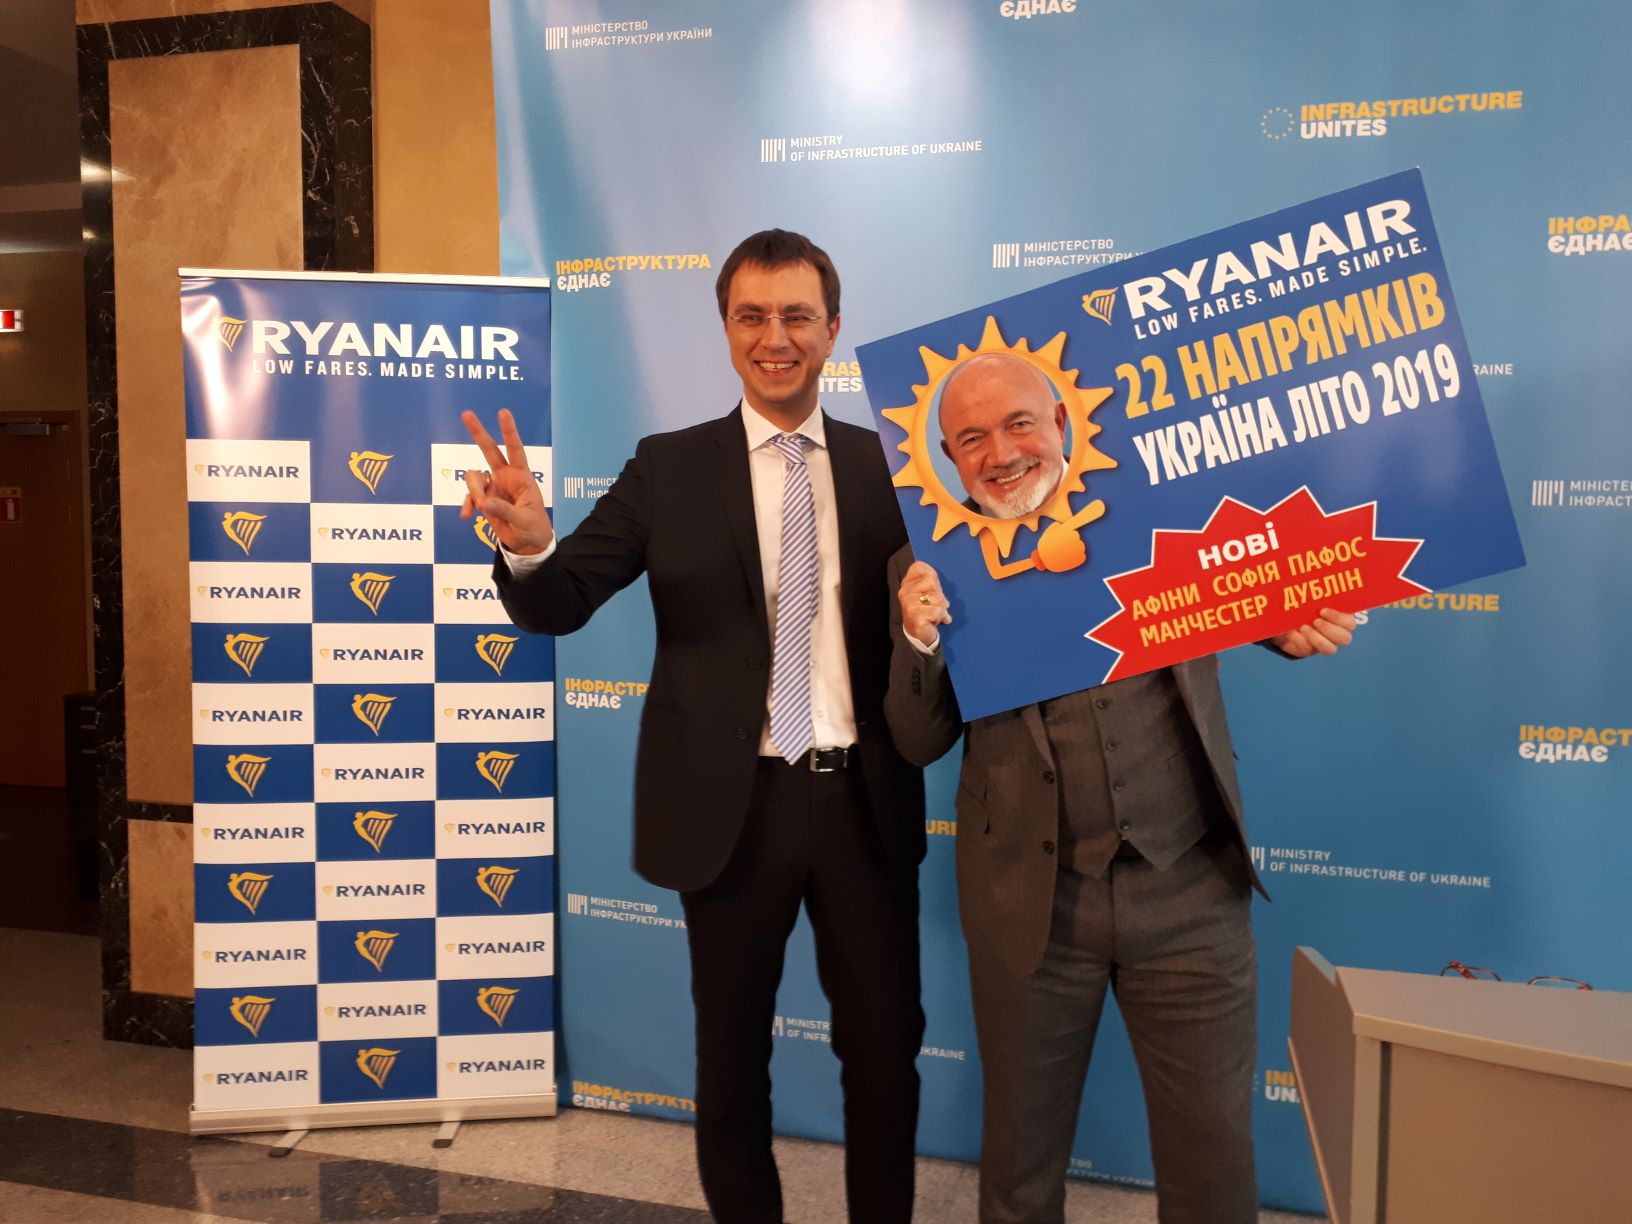 Ryanair Launches New Sofia Route To Kyiv